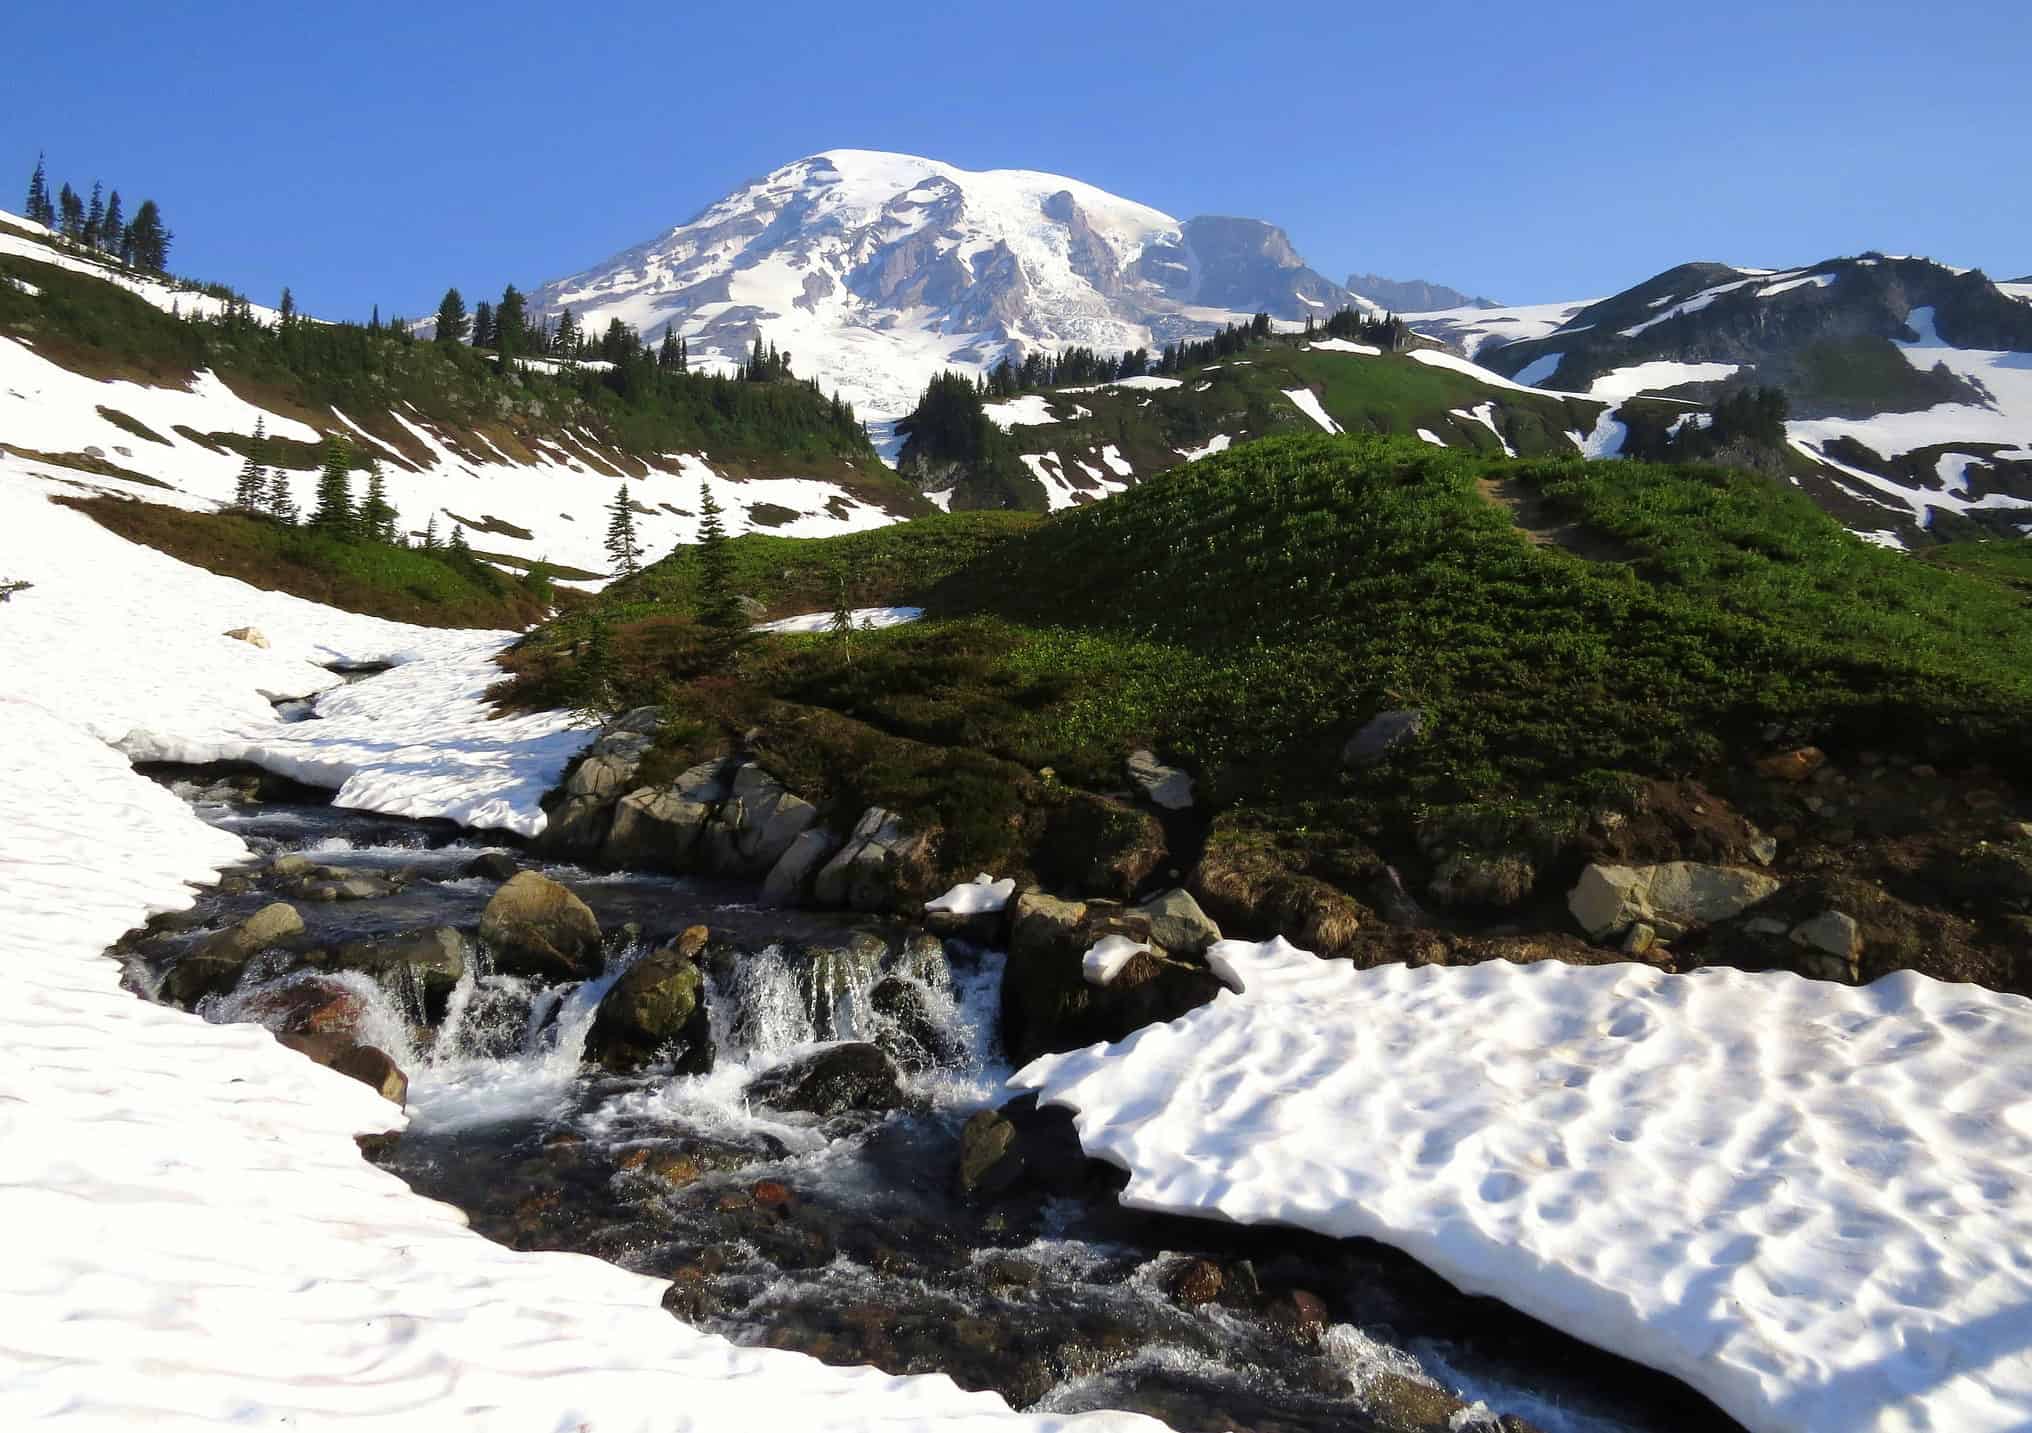 10 Ways To Experience Mt. Rainier This Spring